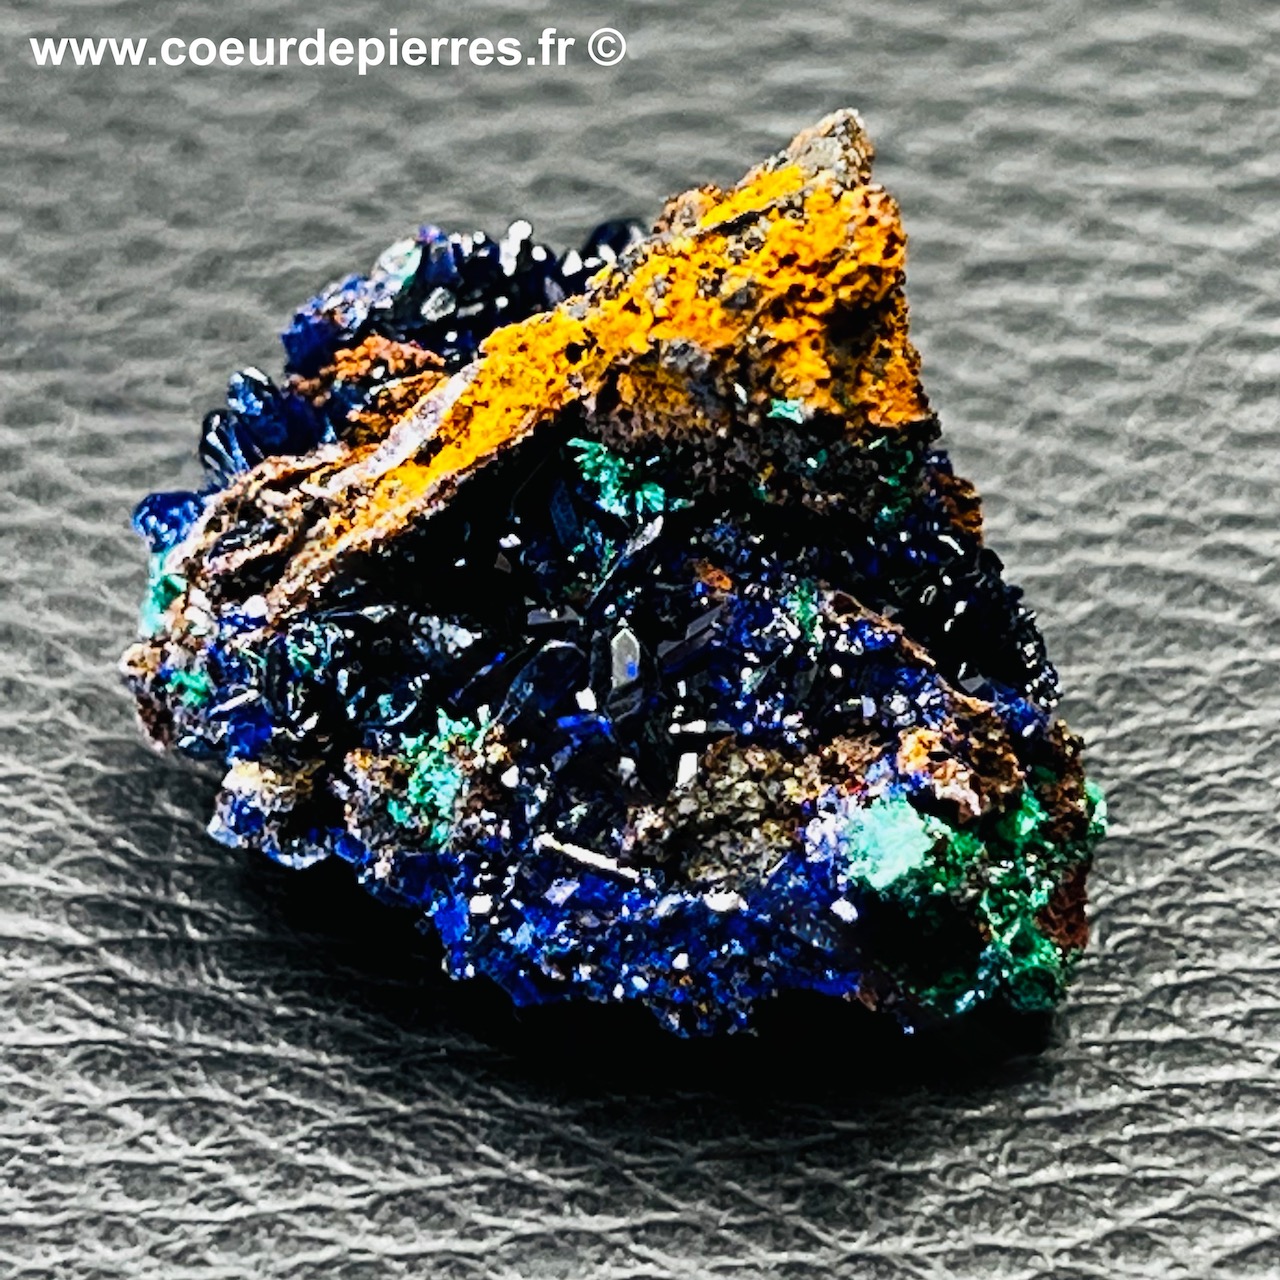 Azurite cristallisée du Maroc (réf azm19)